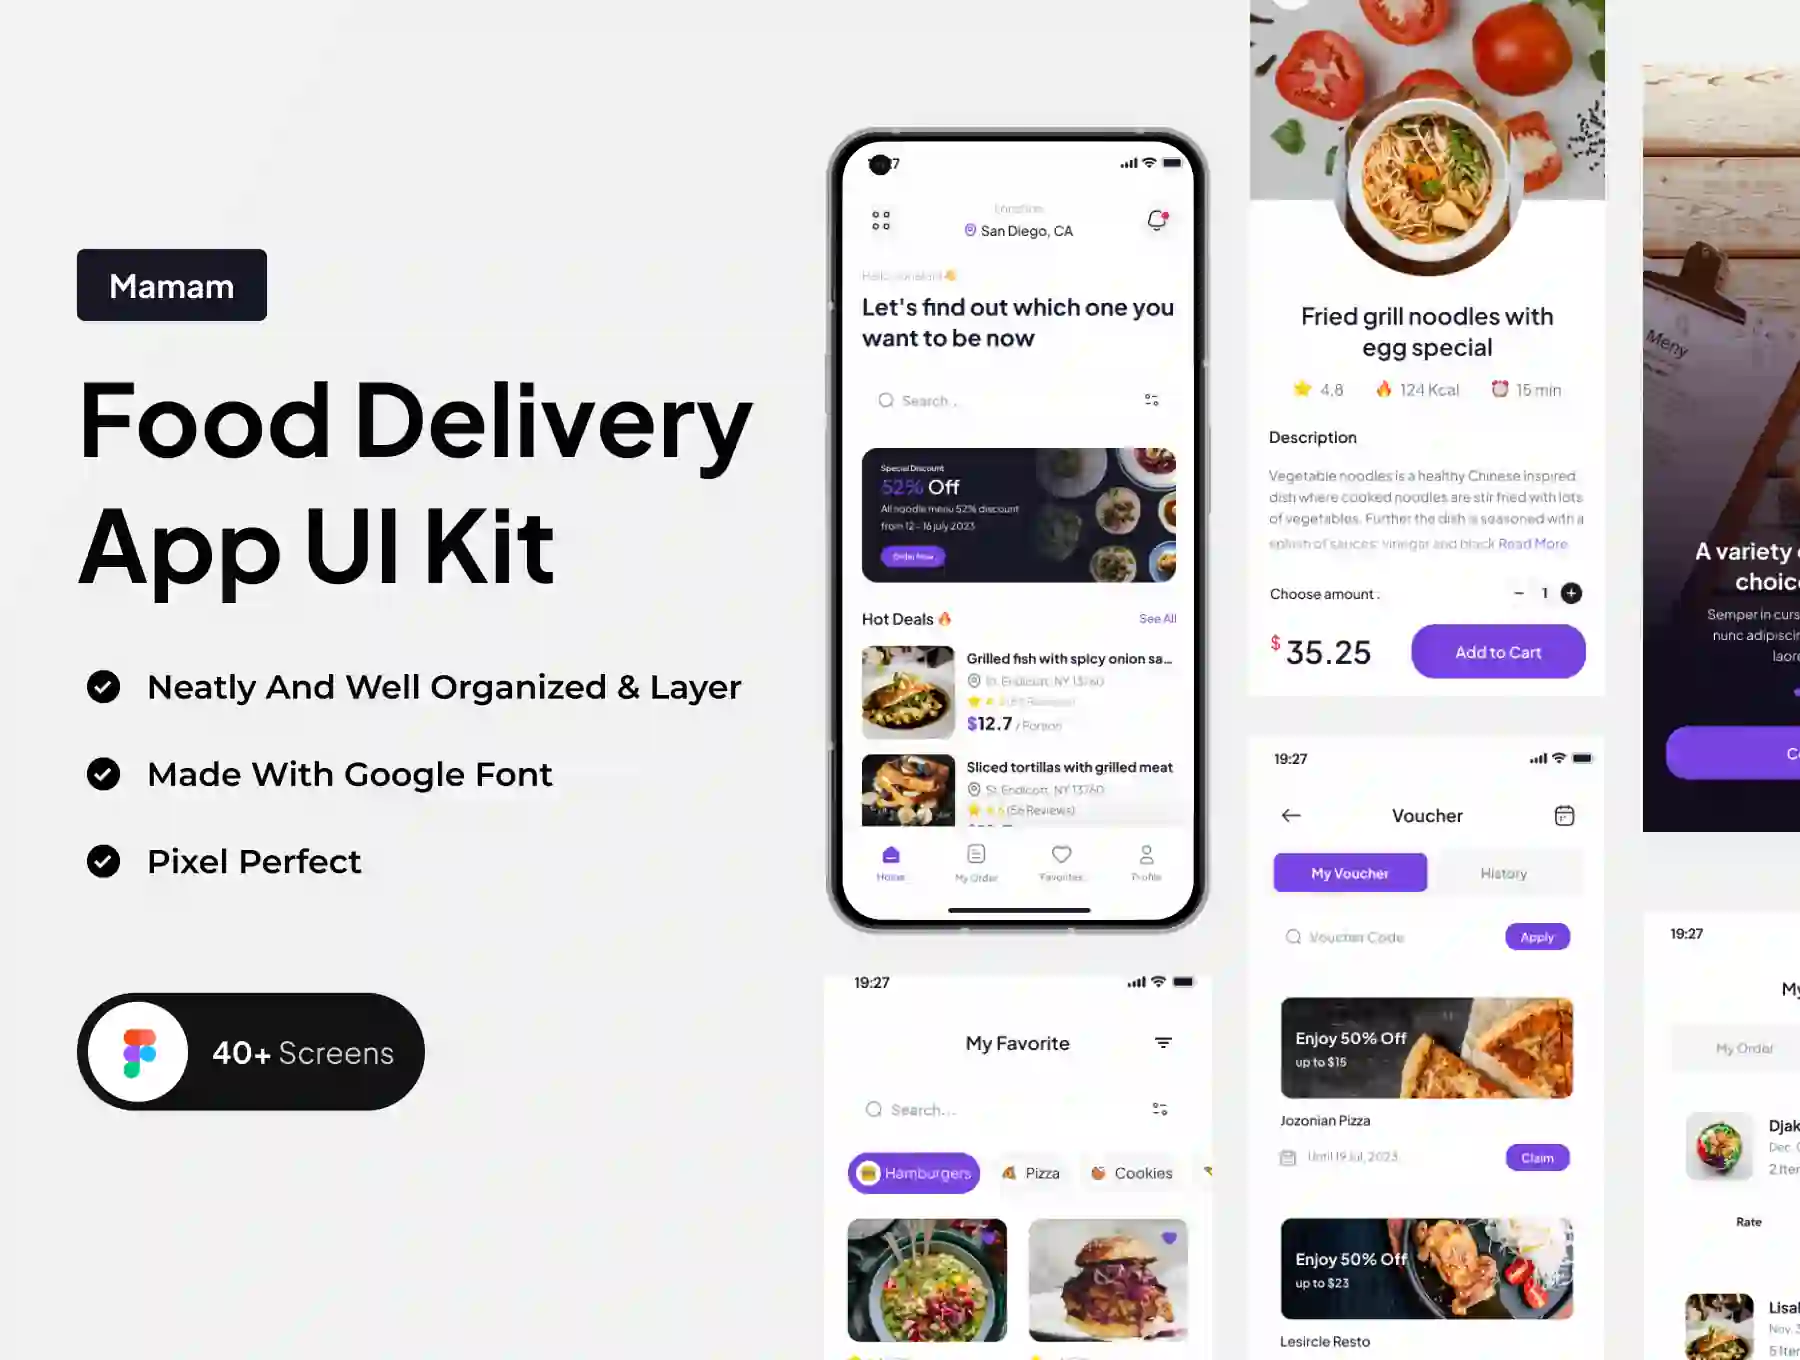 Mamam - Food Delivery App UI Kit